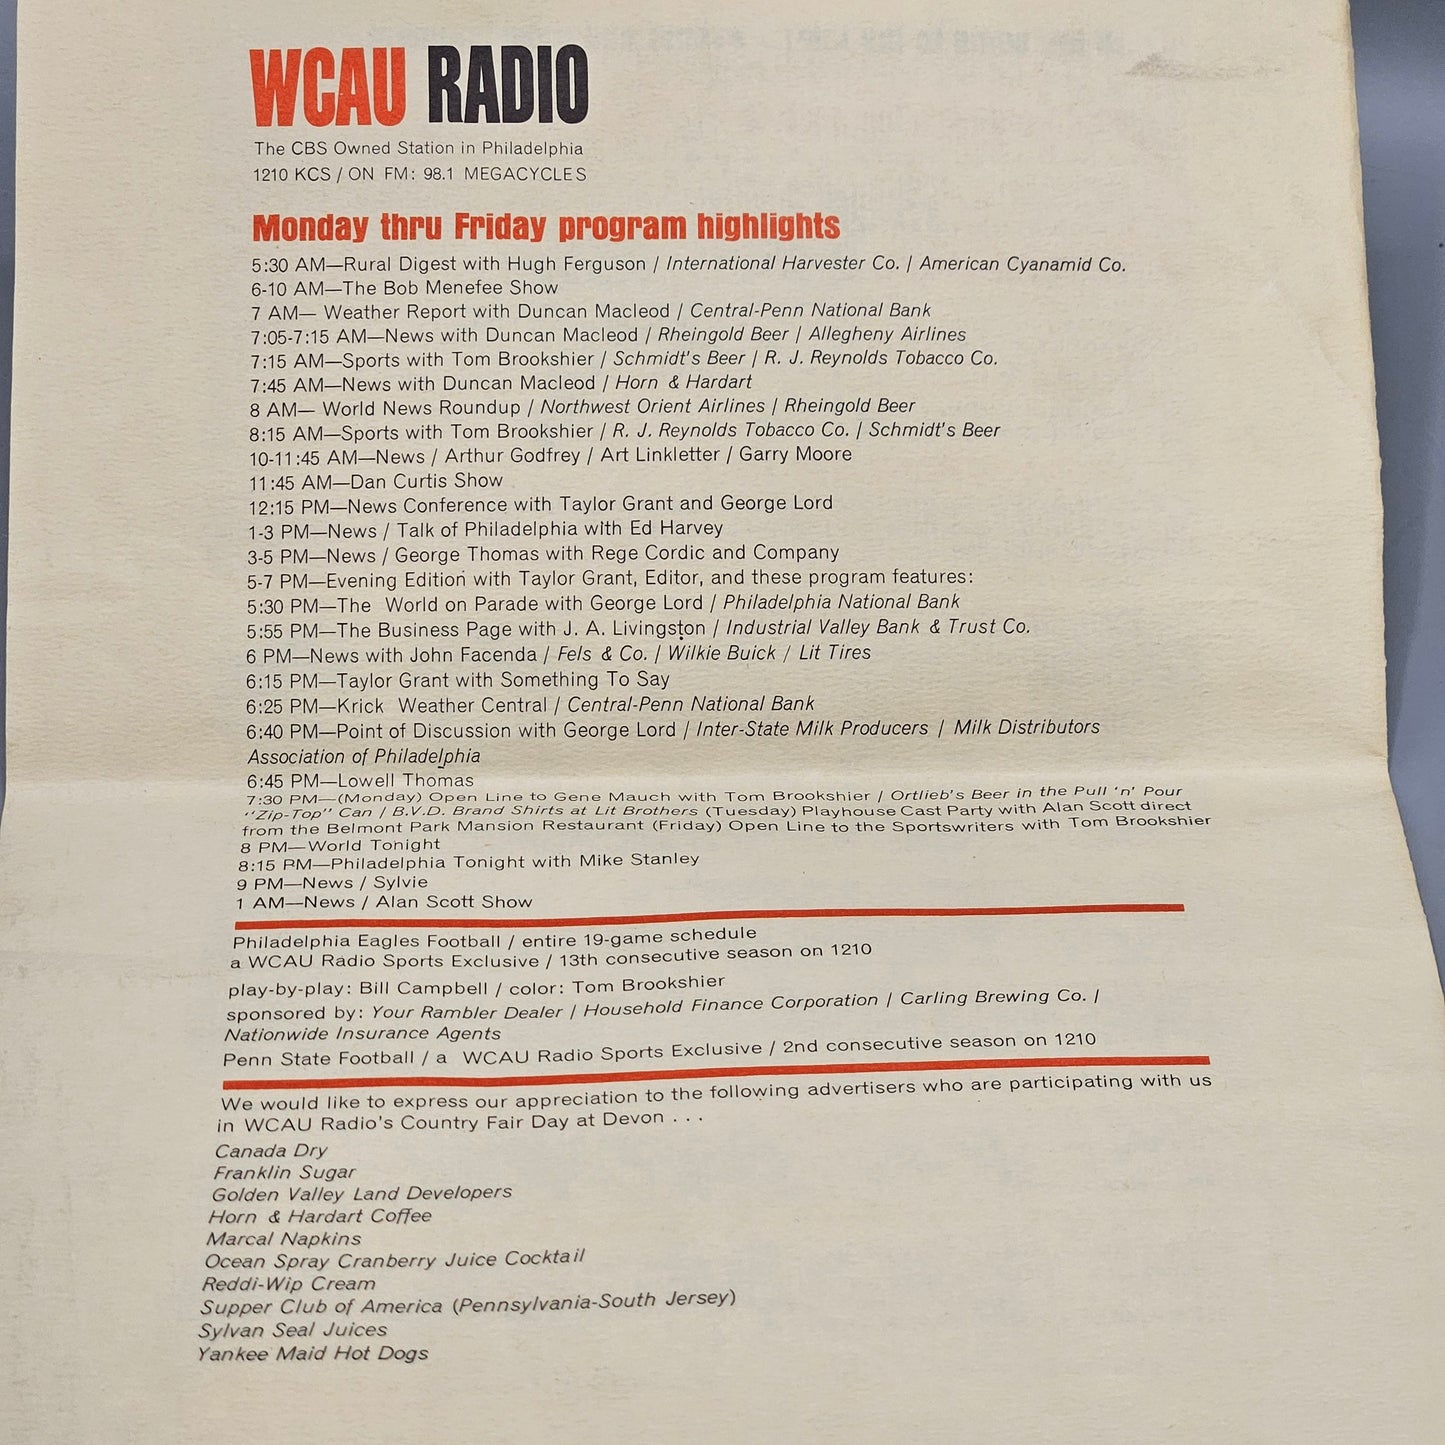 1963 Devon Horse Show Program with WCAU Radio Promotional Photos - Country Show at Devon